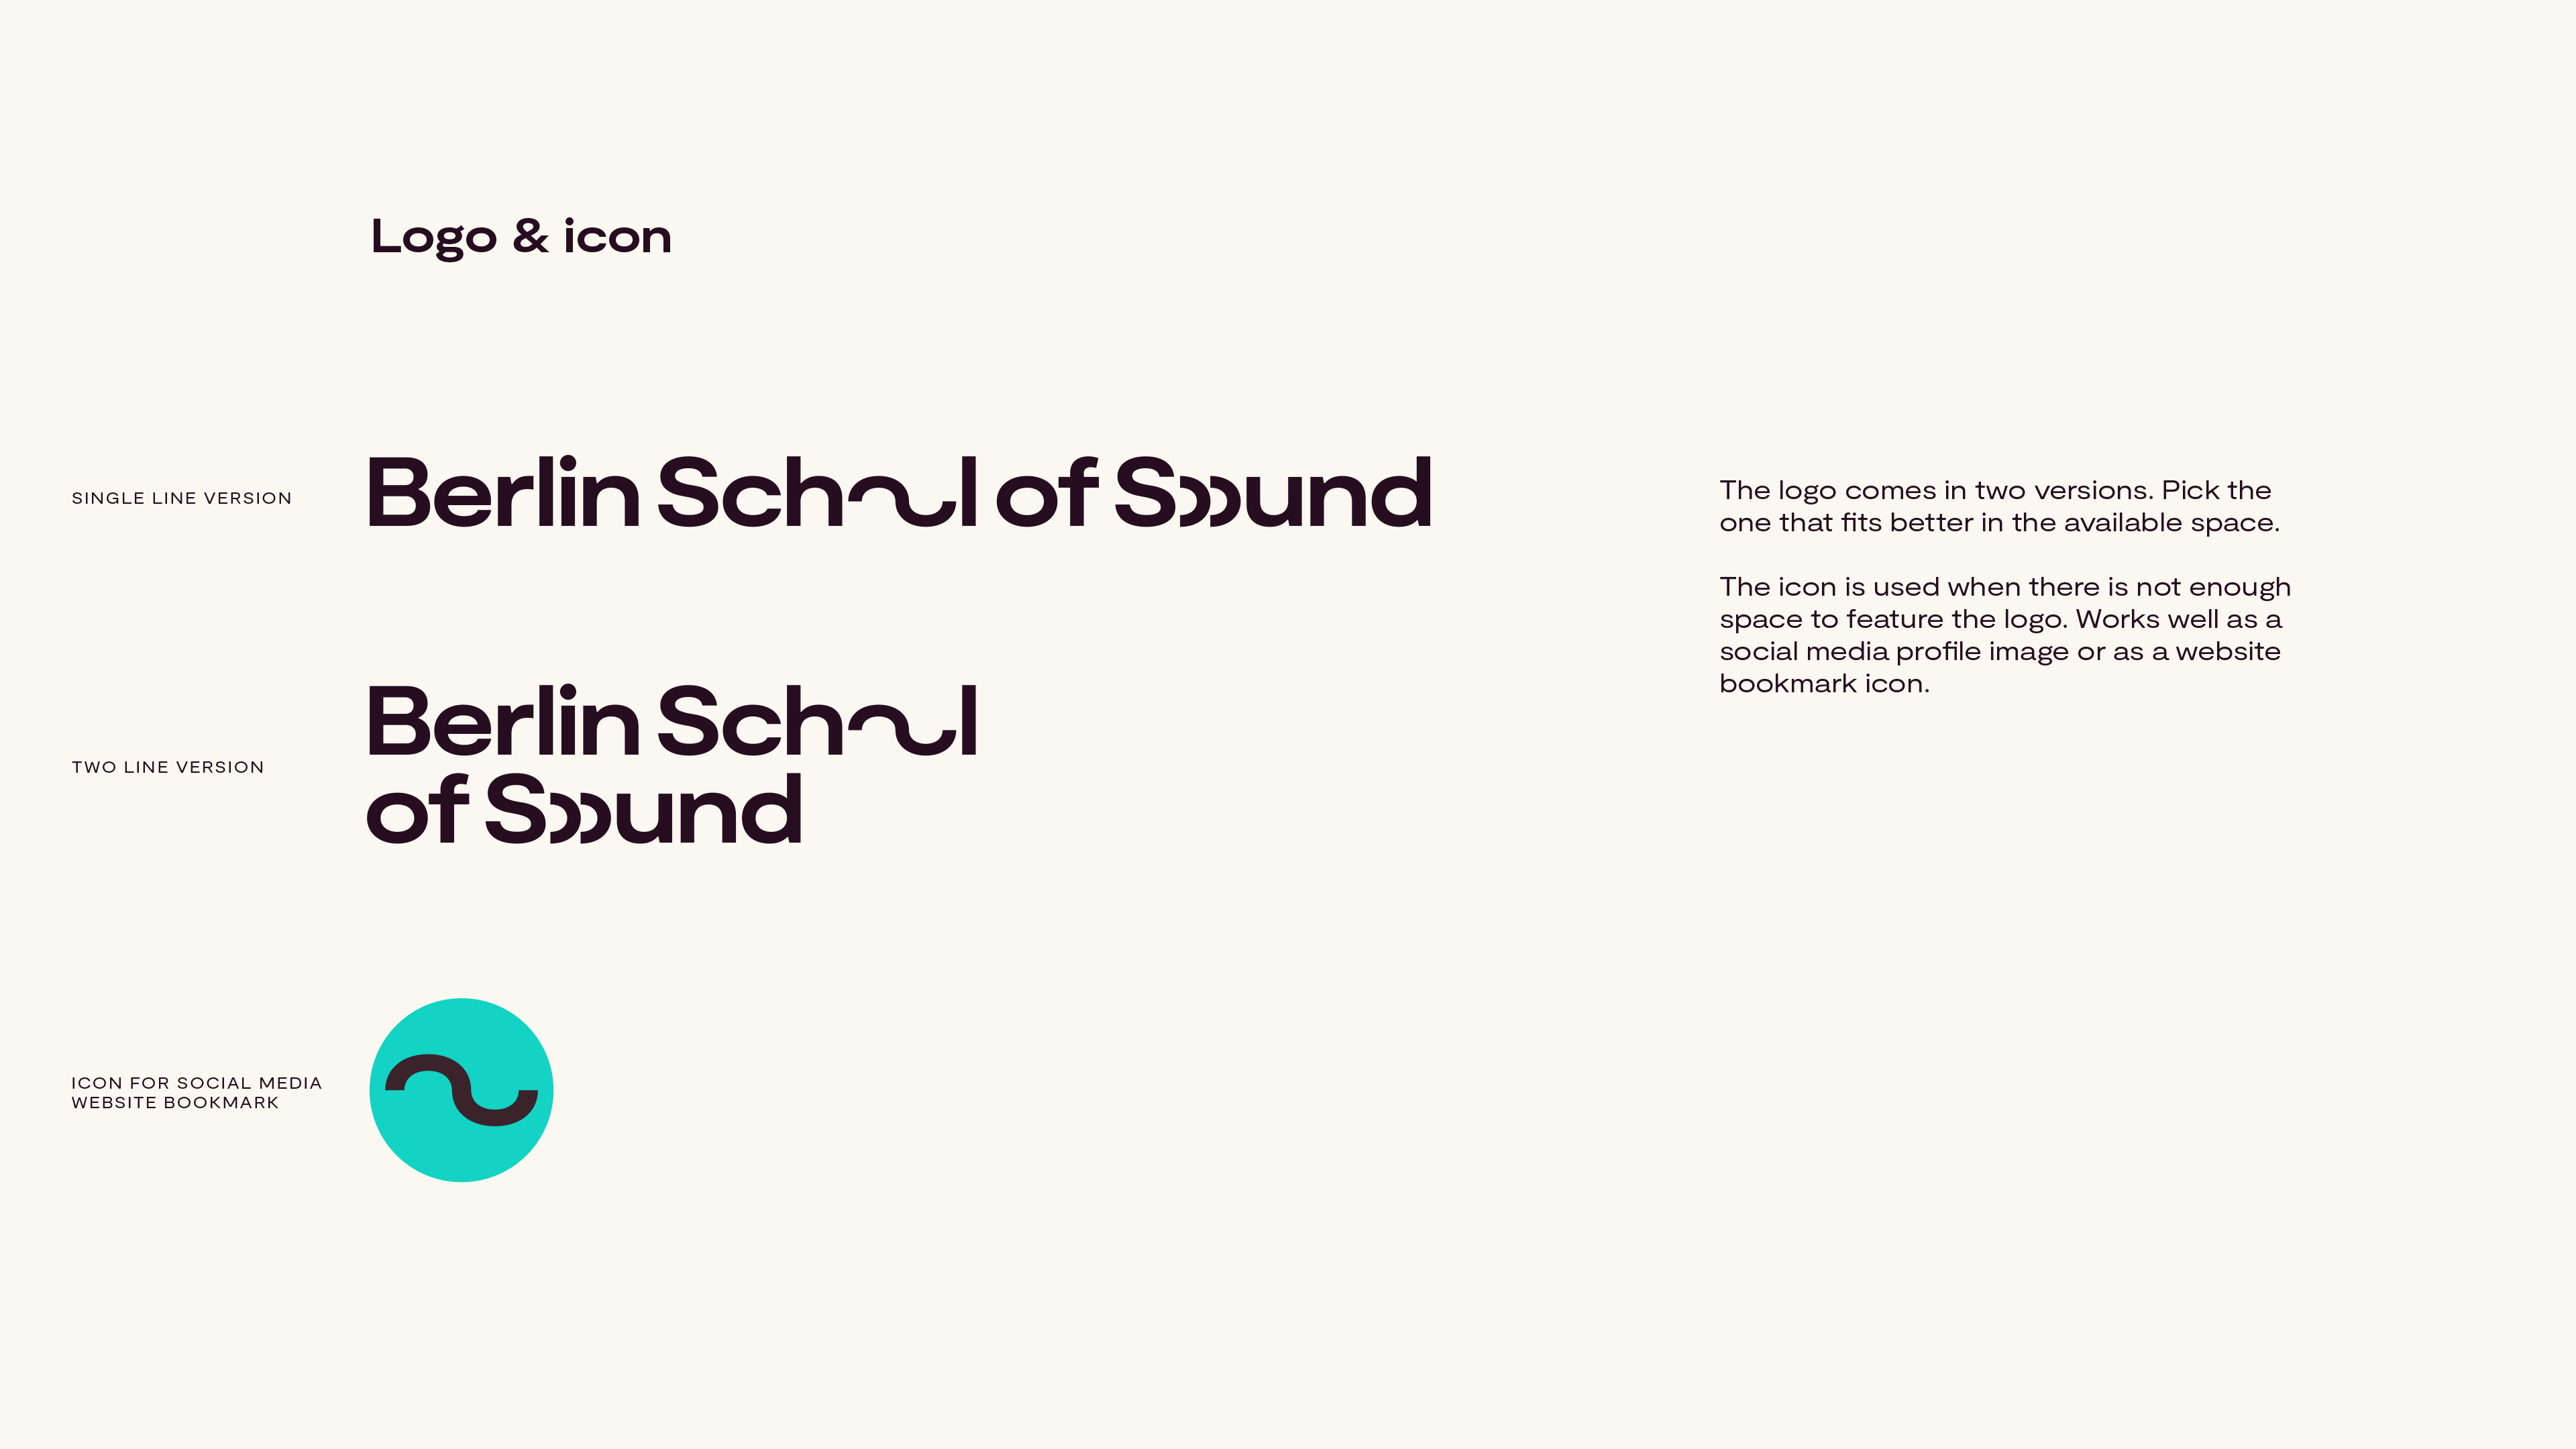 Berlin School of Sound branding guidelines, logo variants